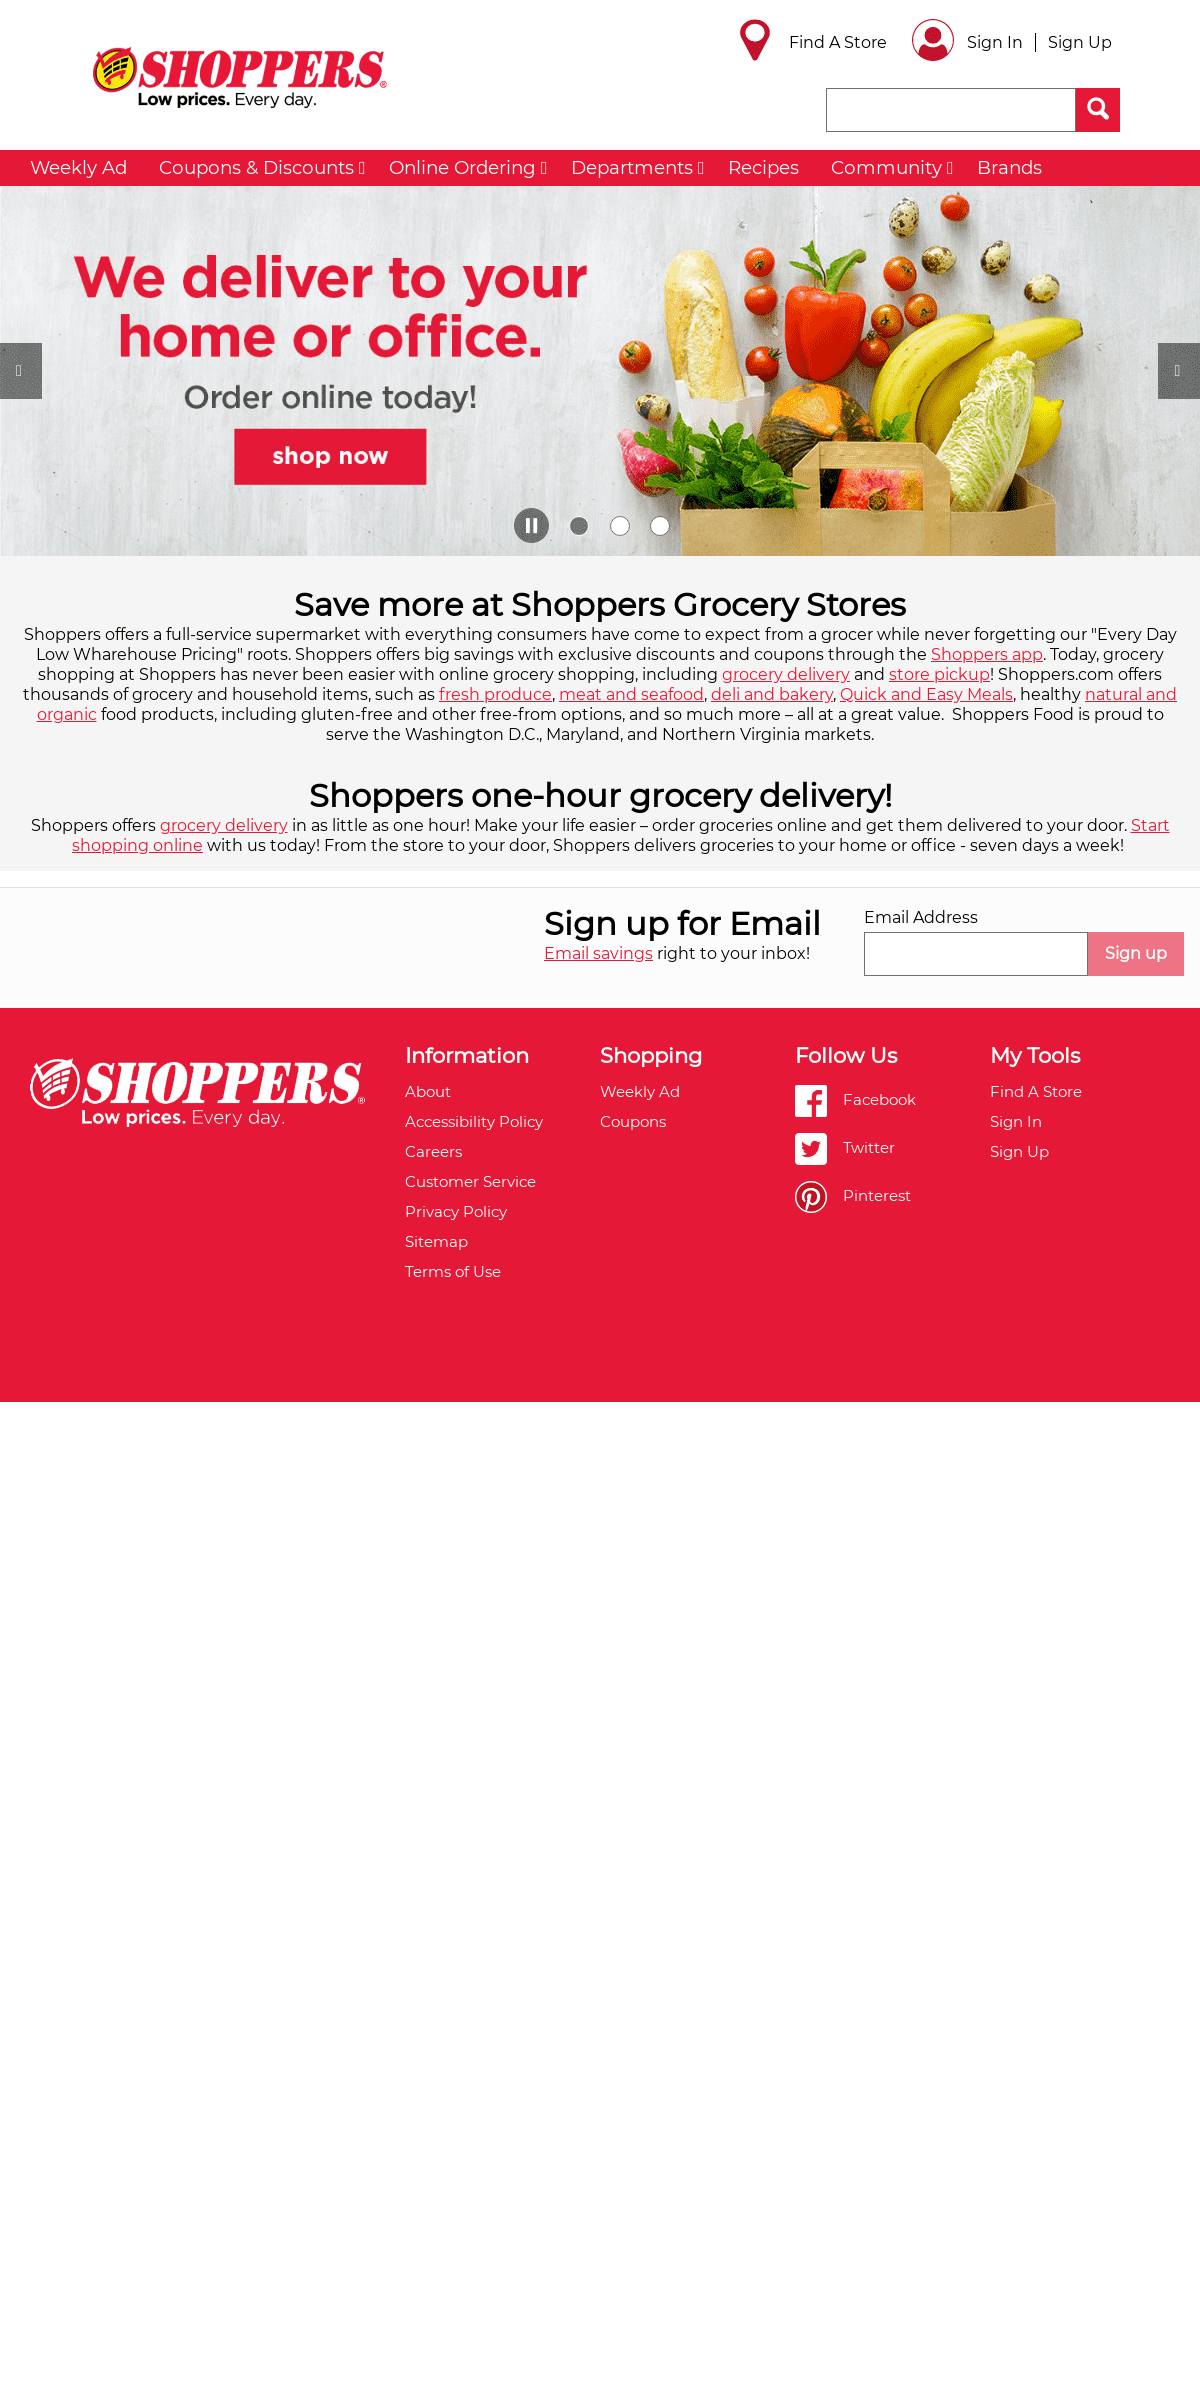 A complete backup of shoppersfood.com